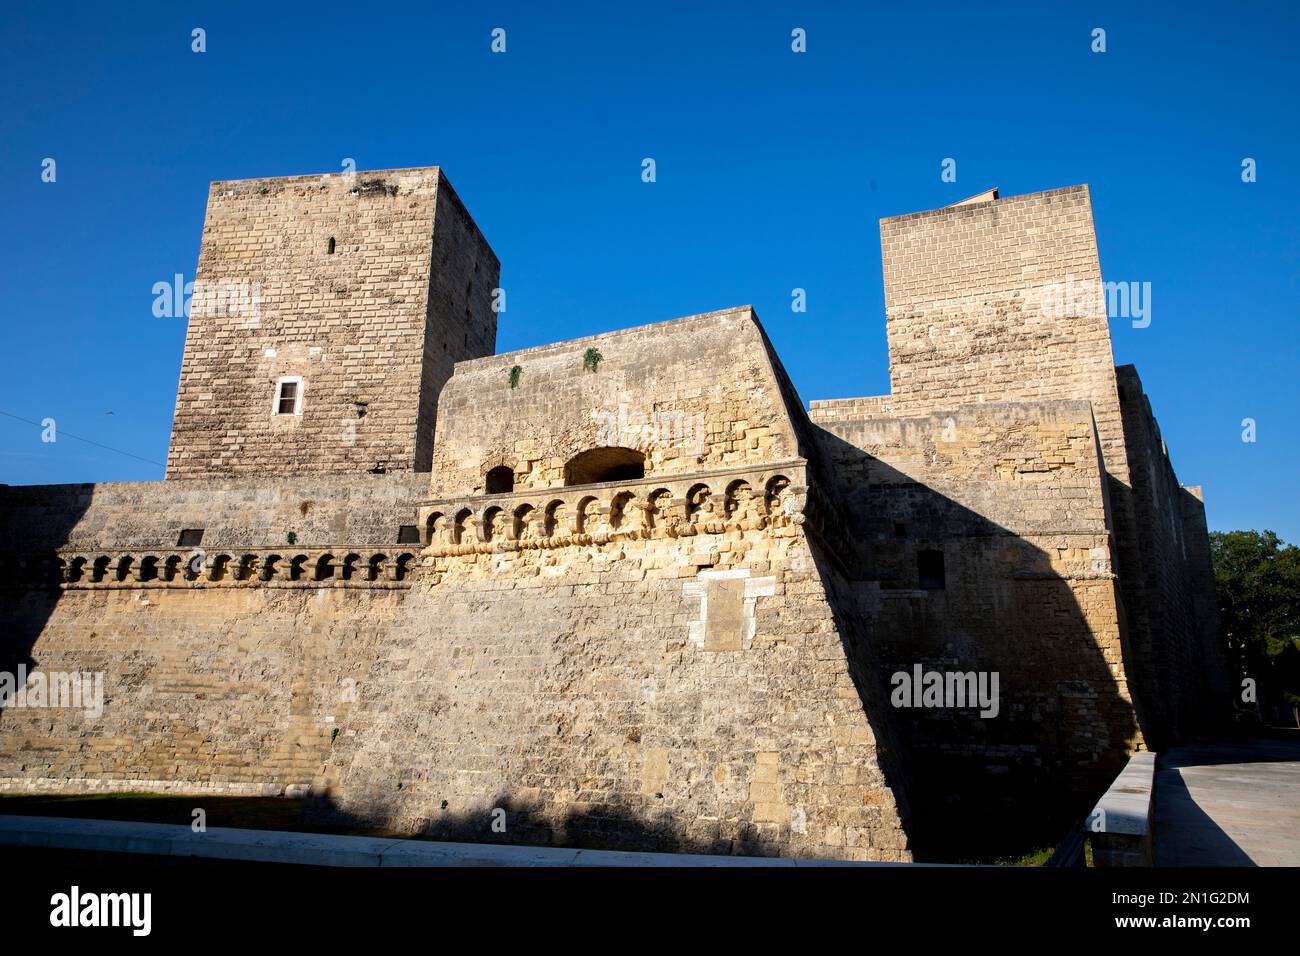 Castello Svevo (Swabian Castle), Bari, Puglia, Italy, Europe Stock Photo